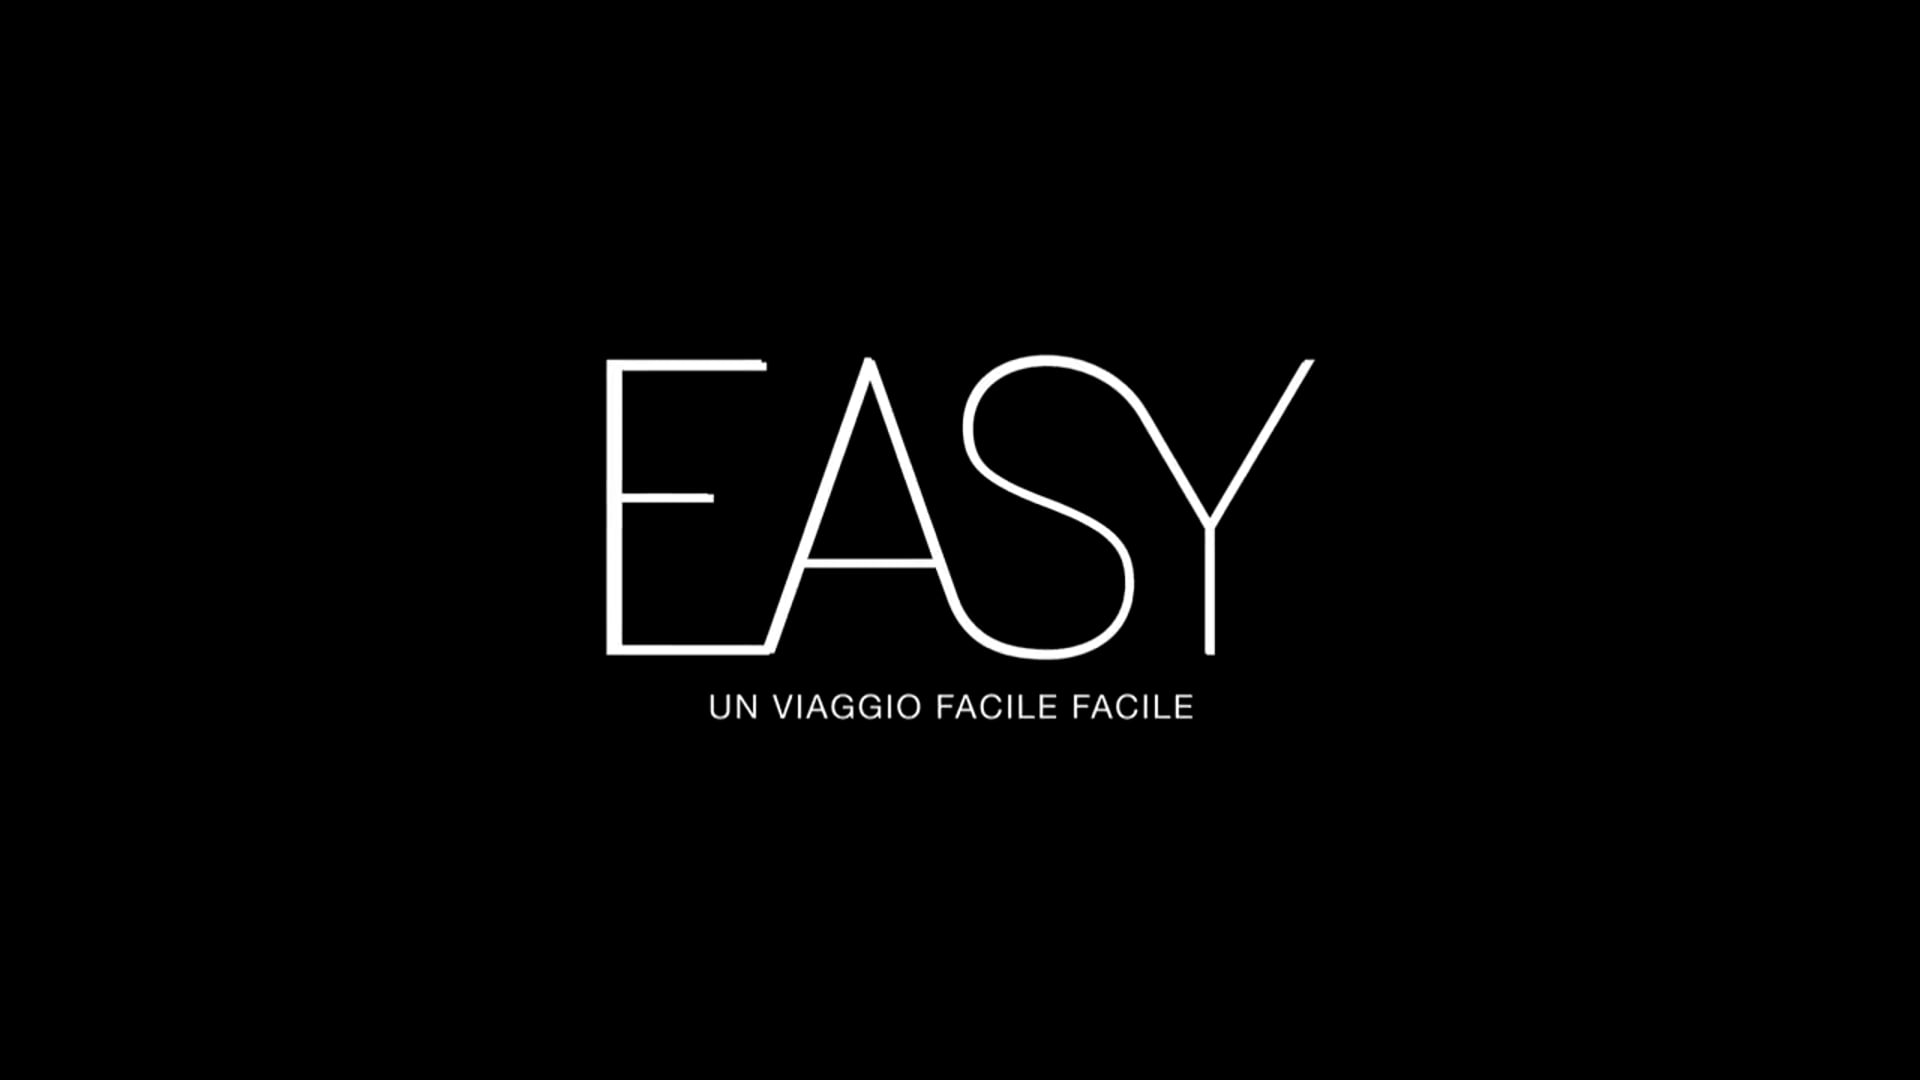 Easy - Un viaggio facile facile. Trailer